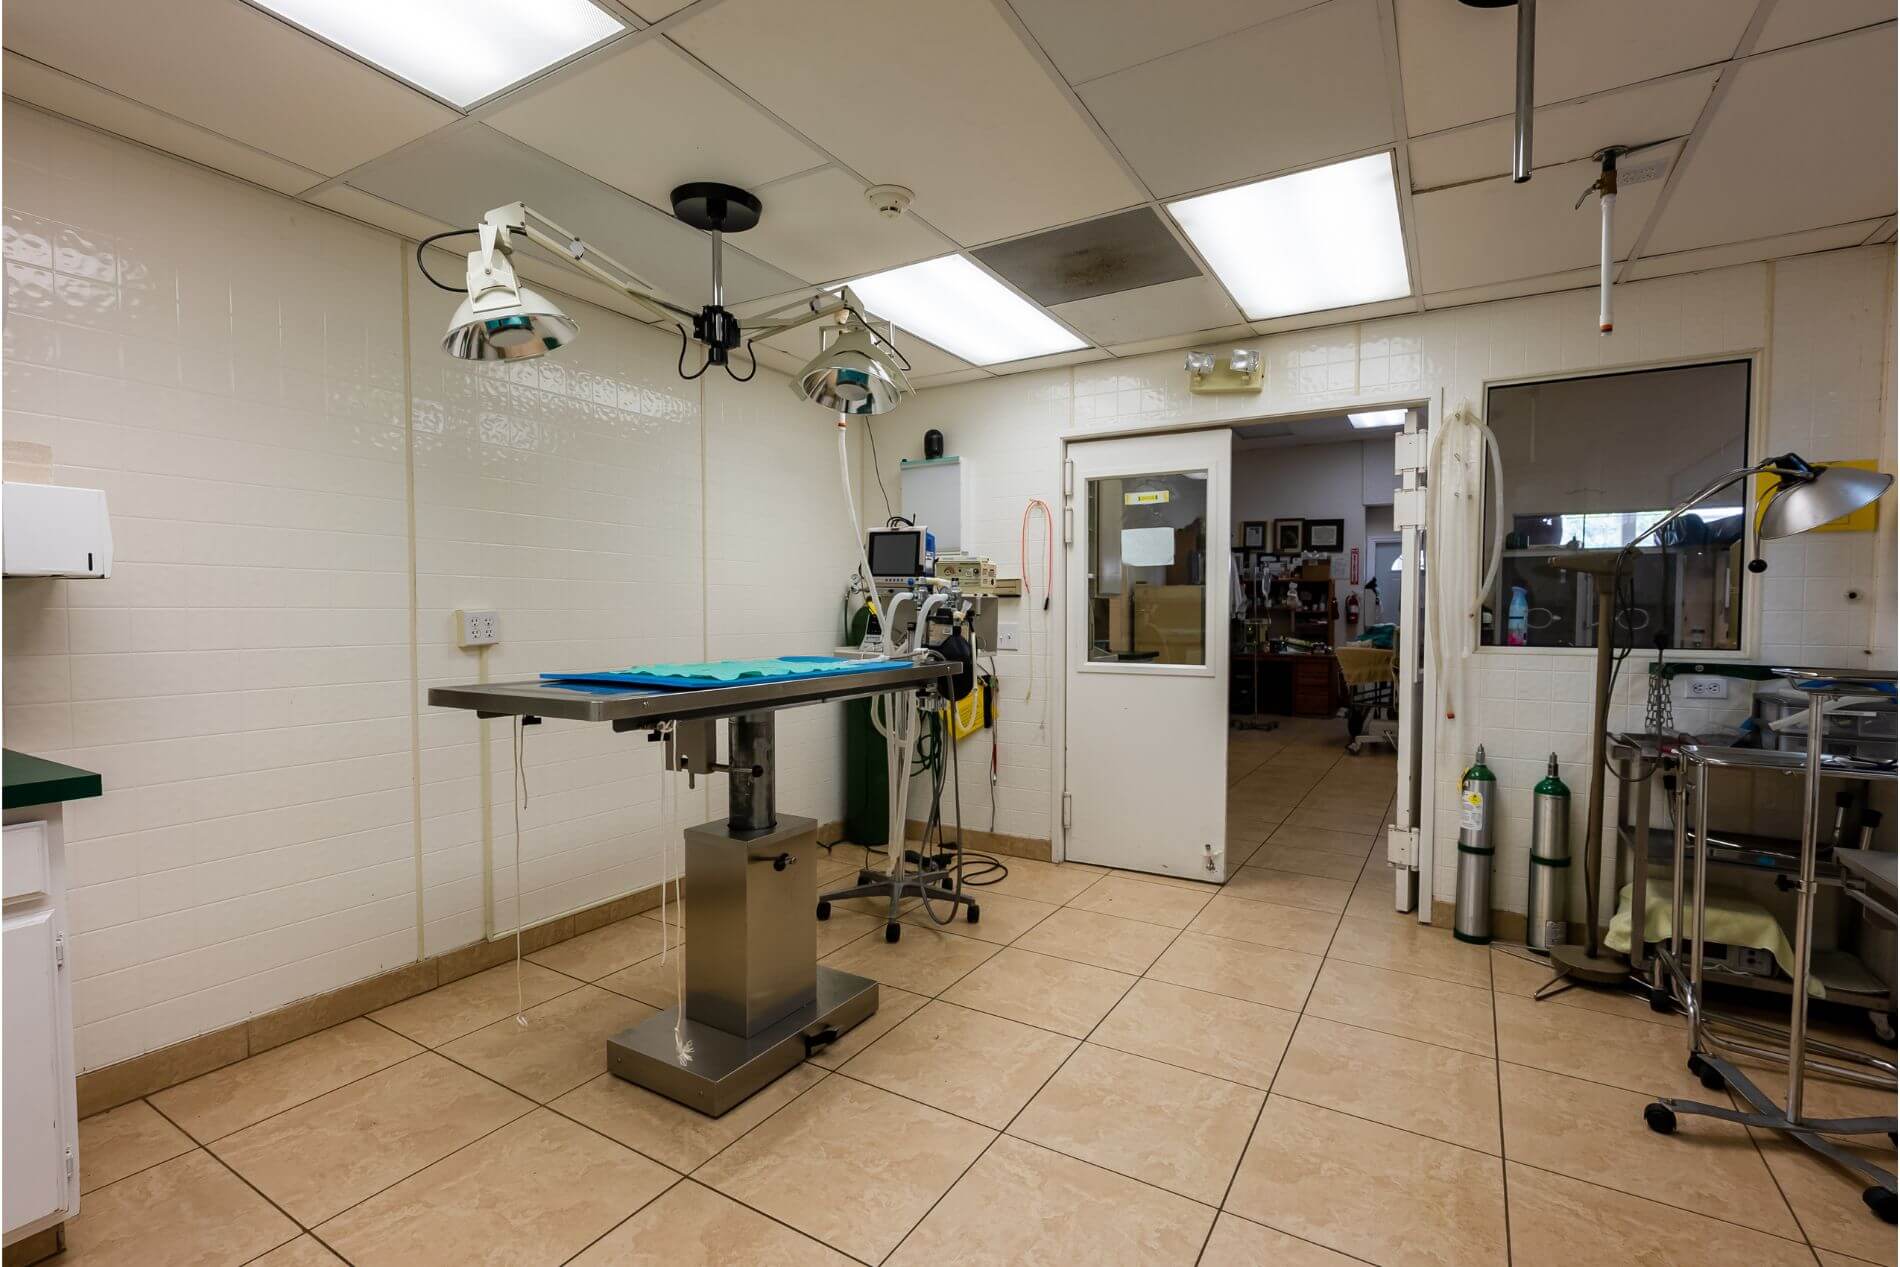 dr. domotor's animal hospital exam room